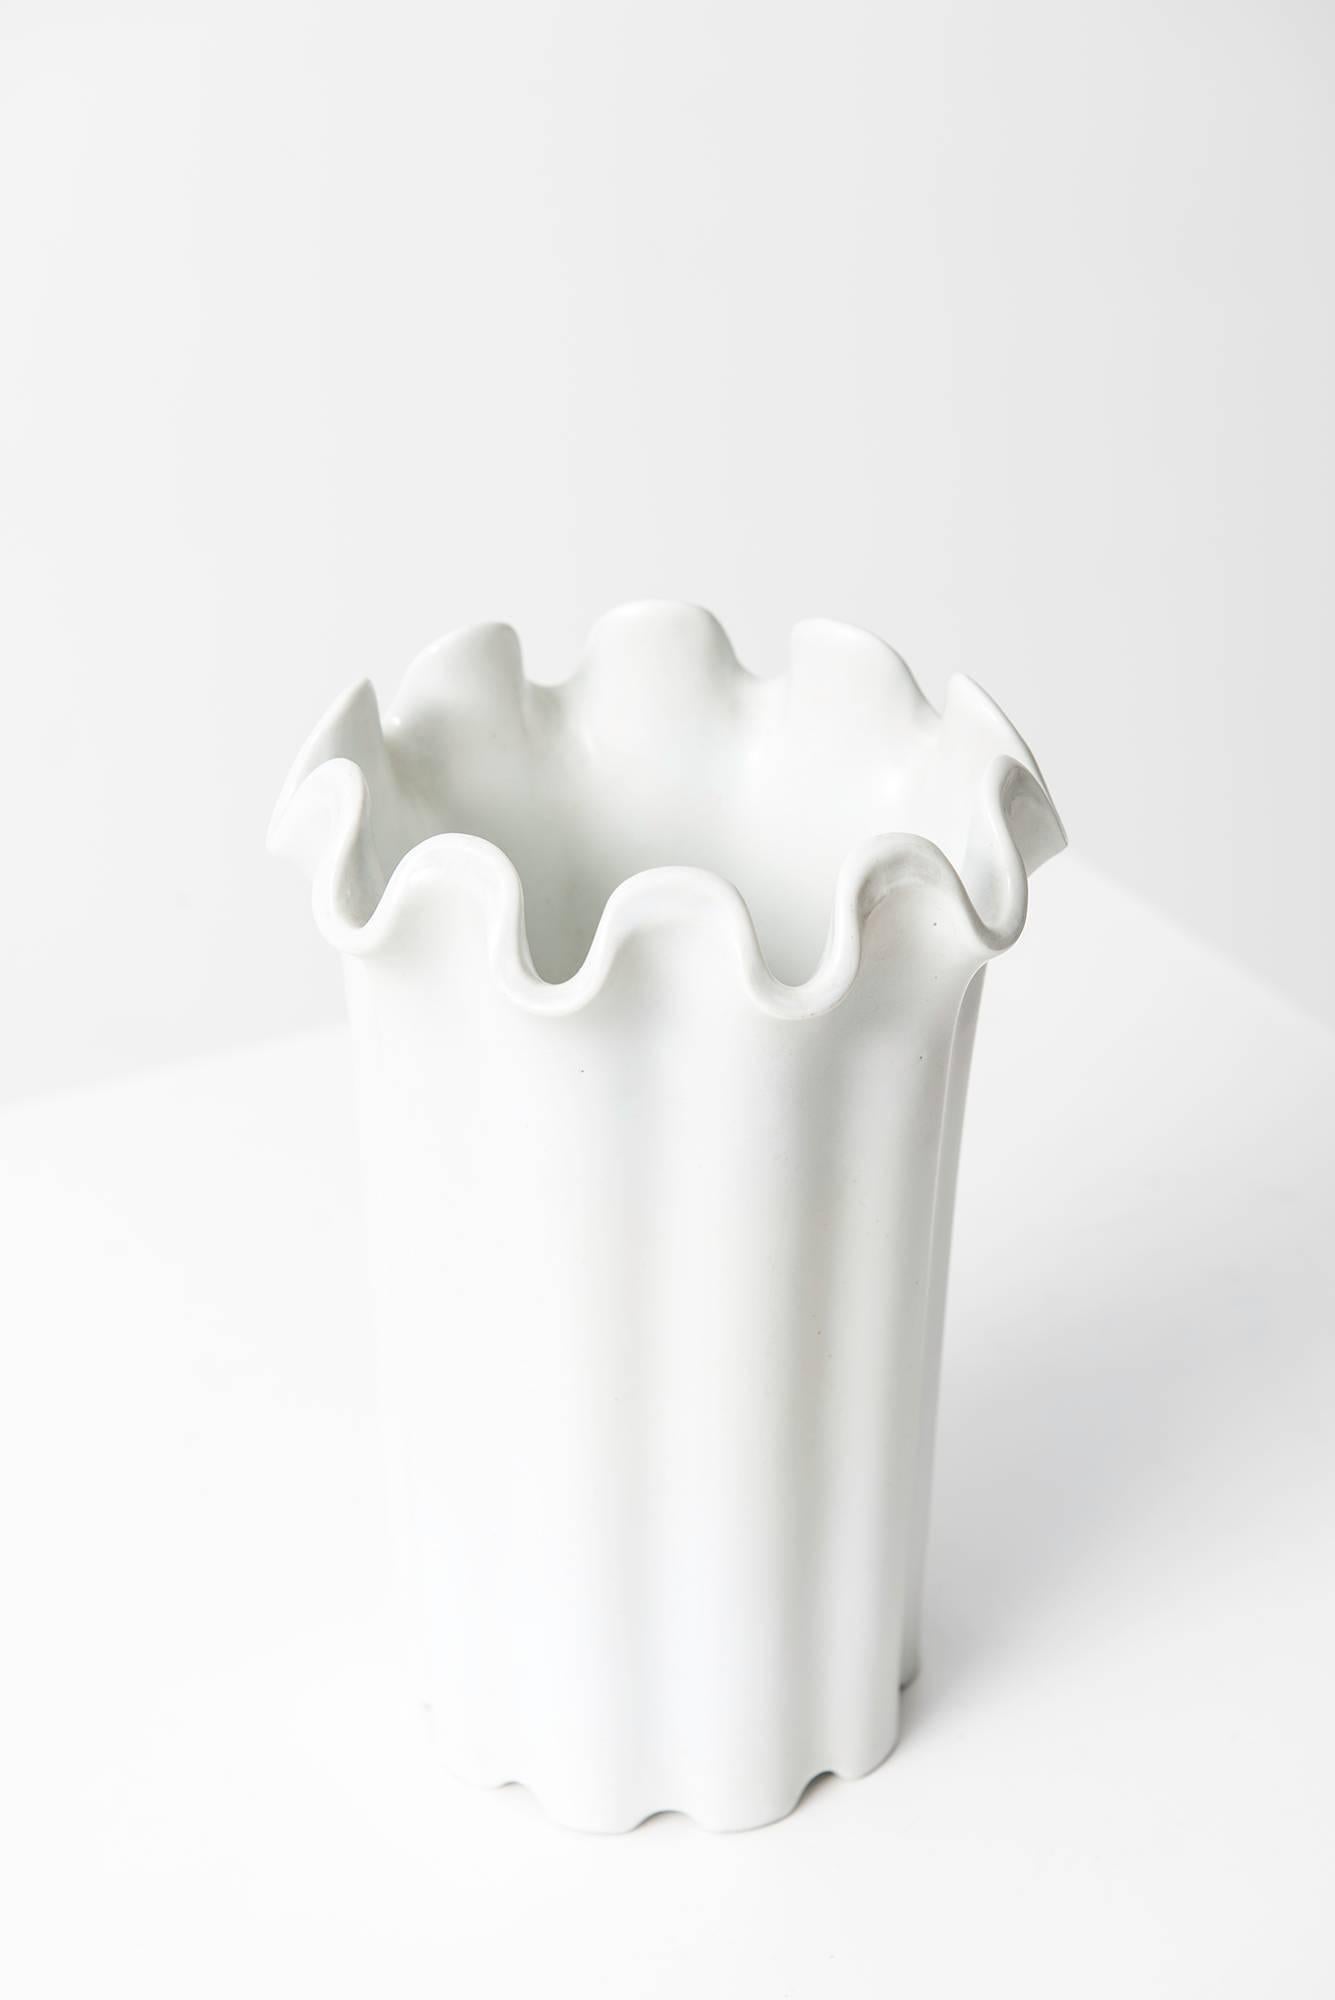 Scandinavian Modern Wilhelm Kage Ceramic Vase Model Våga by Gustavsberg in Sweden